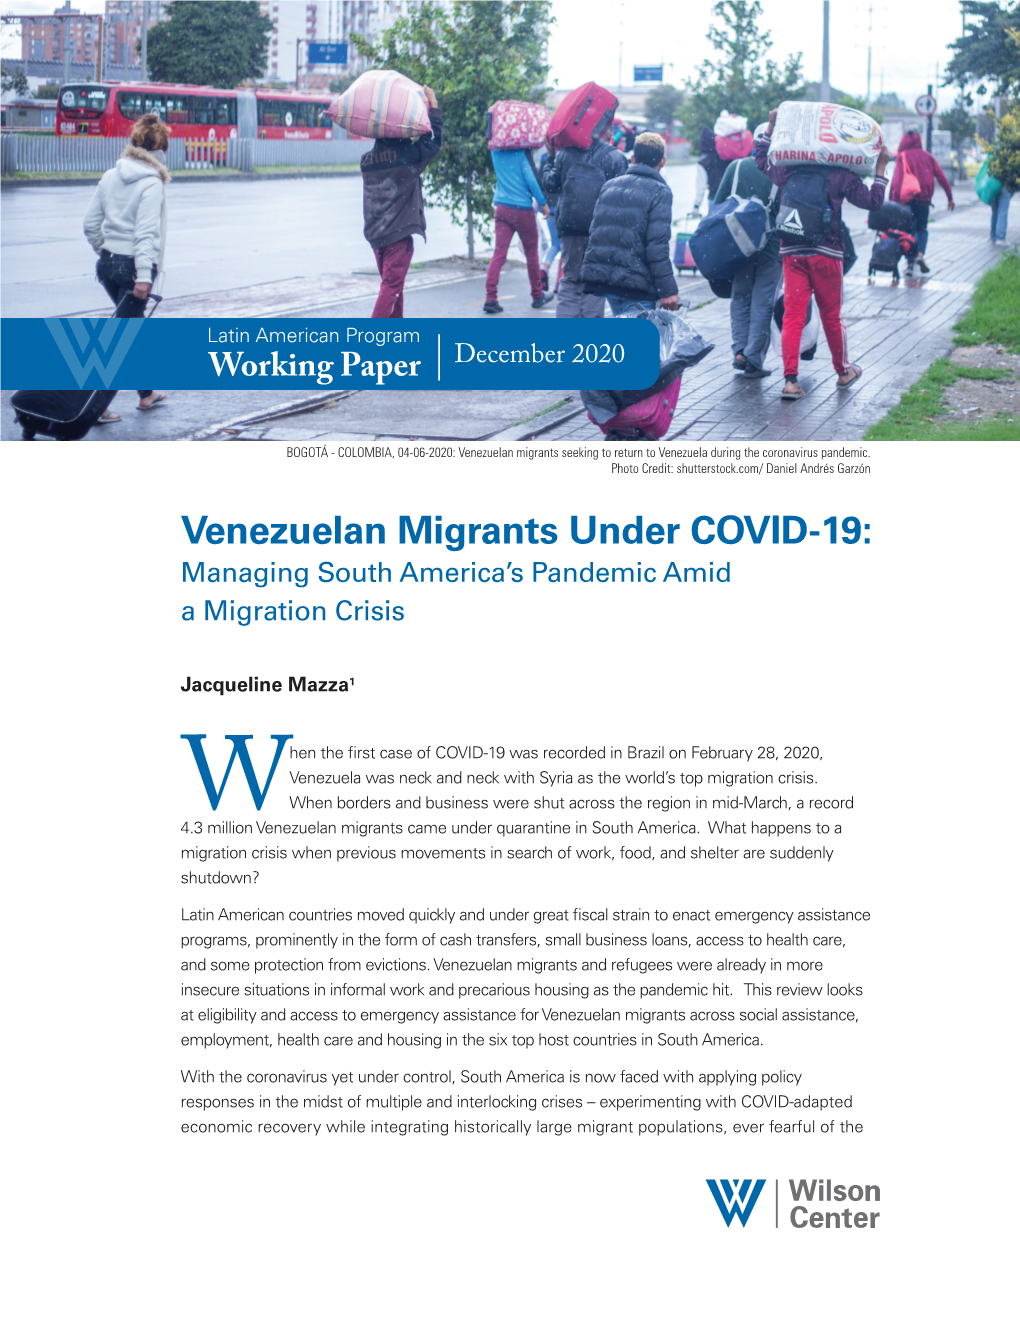 Venezuelan Migrants Under COVID-19: Managing South America’S Pandemic Amid a Migration Crisis